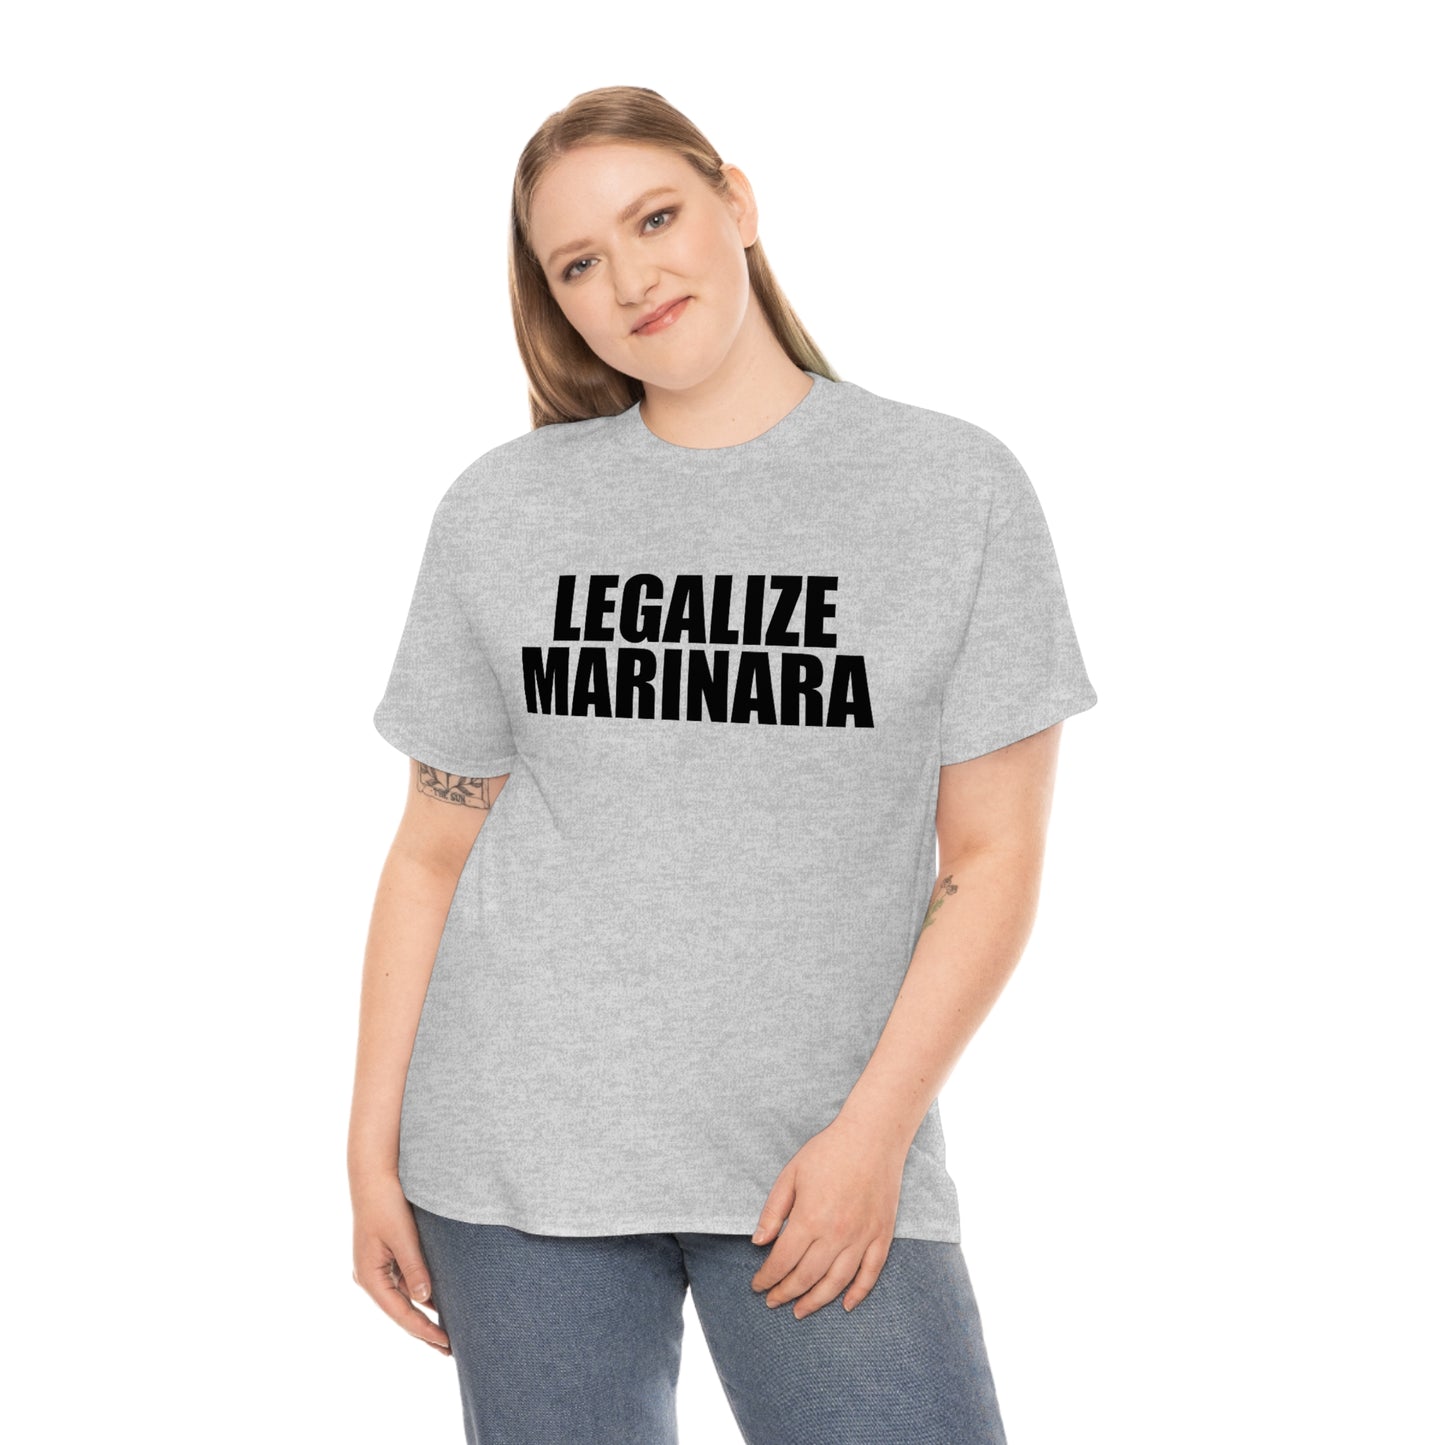 LEGALIZE MARINARA T-SHIRT